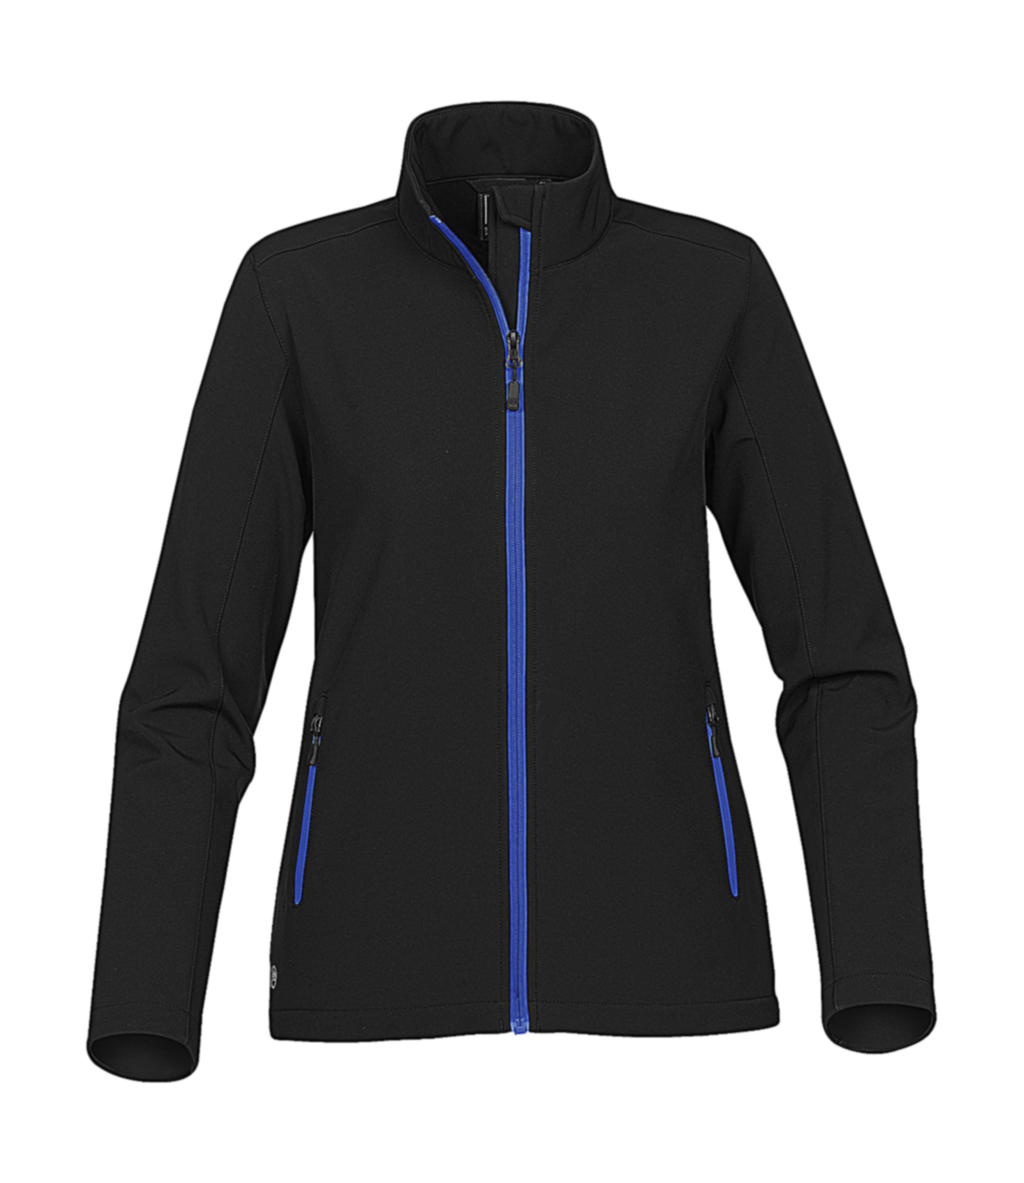  Womens Orbiter Softshell Jacket in Farbe Black/Azure